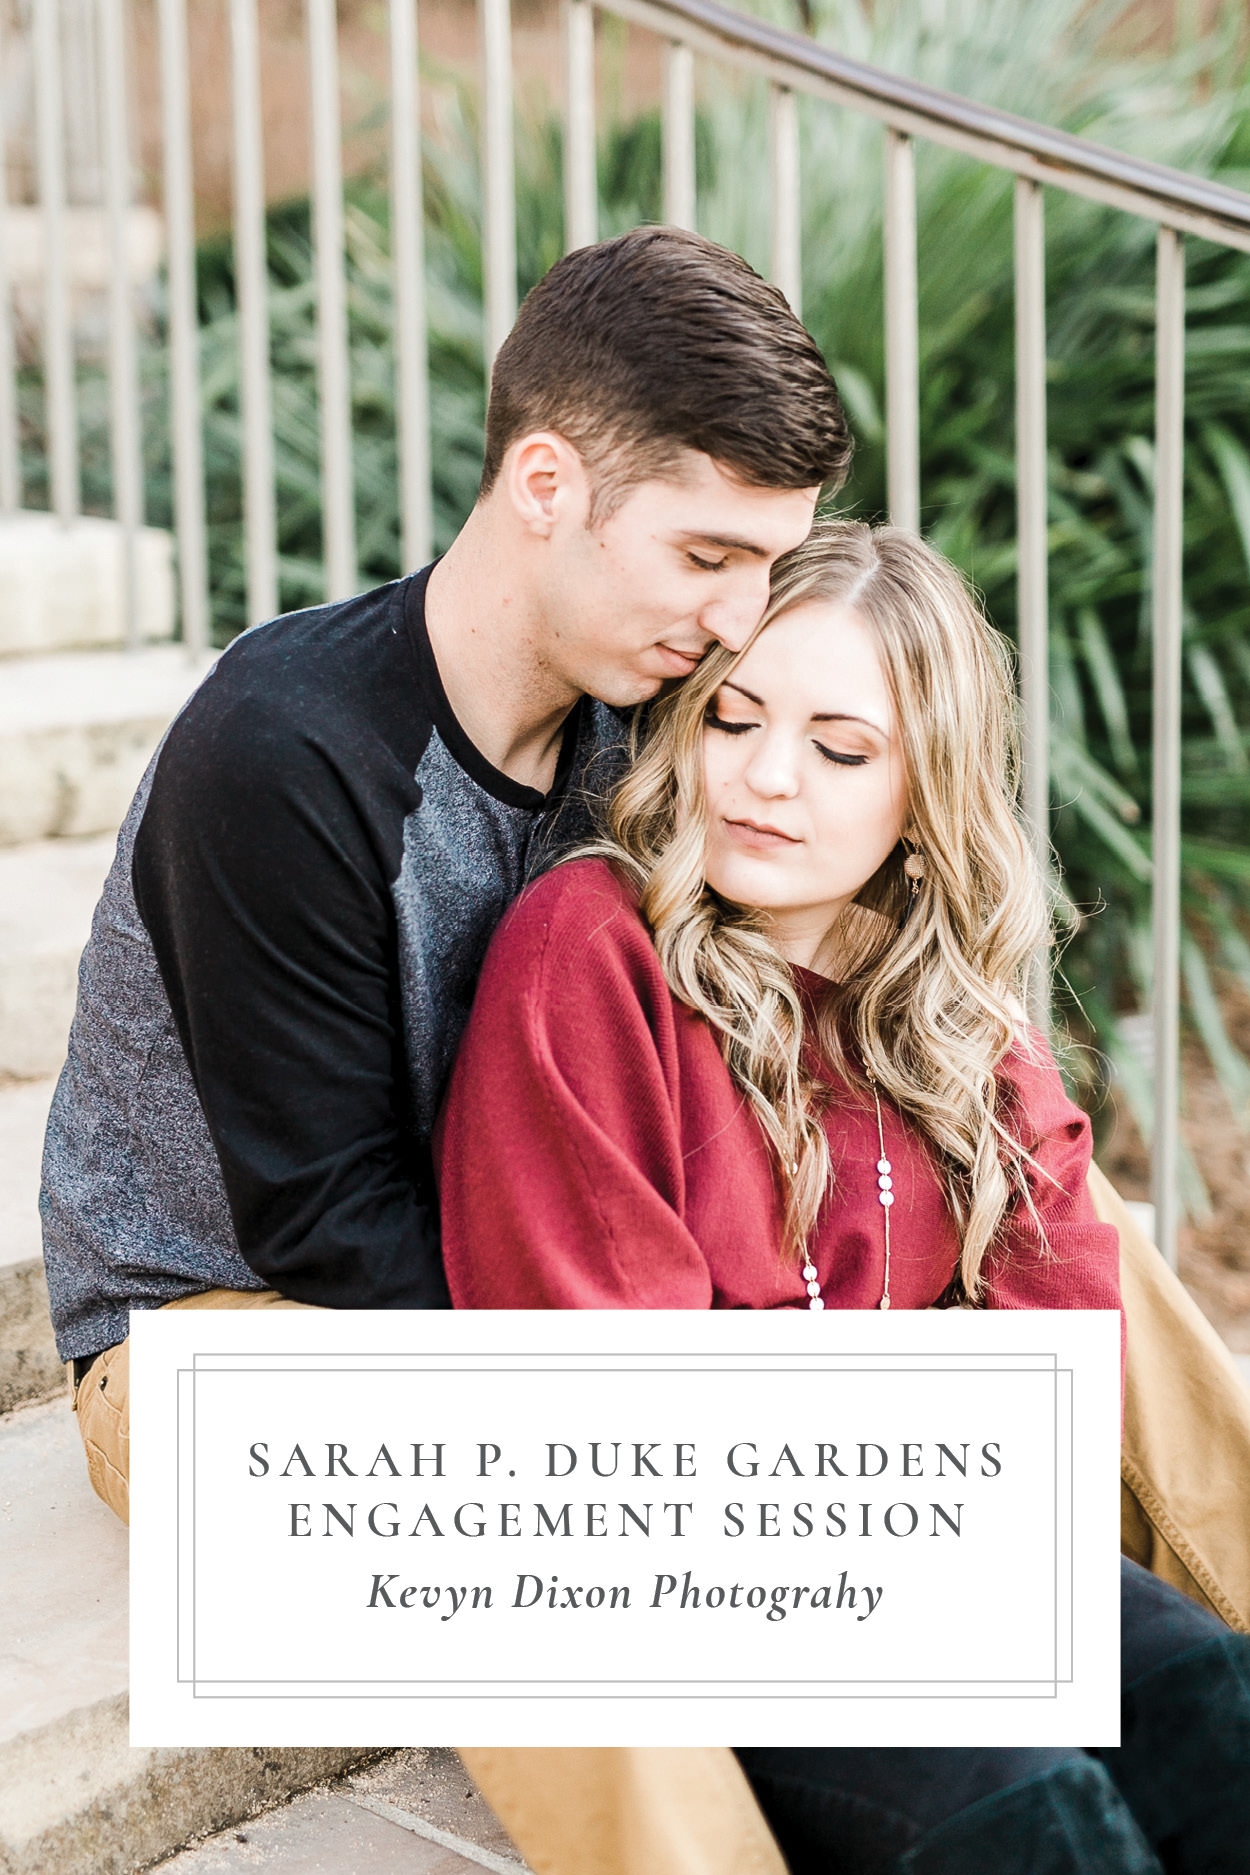 Sarah P. Duke Gardens Engagement Session